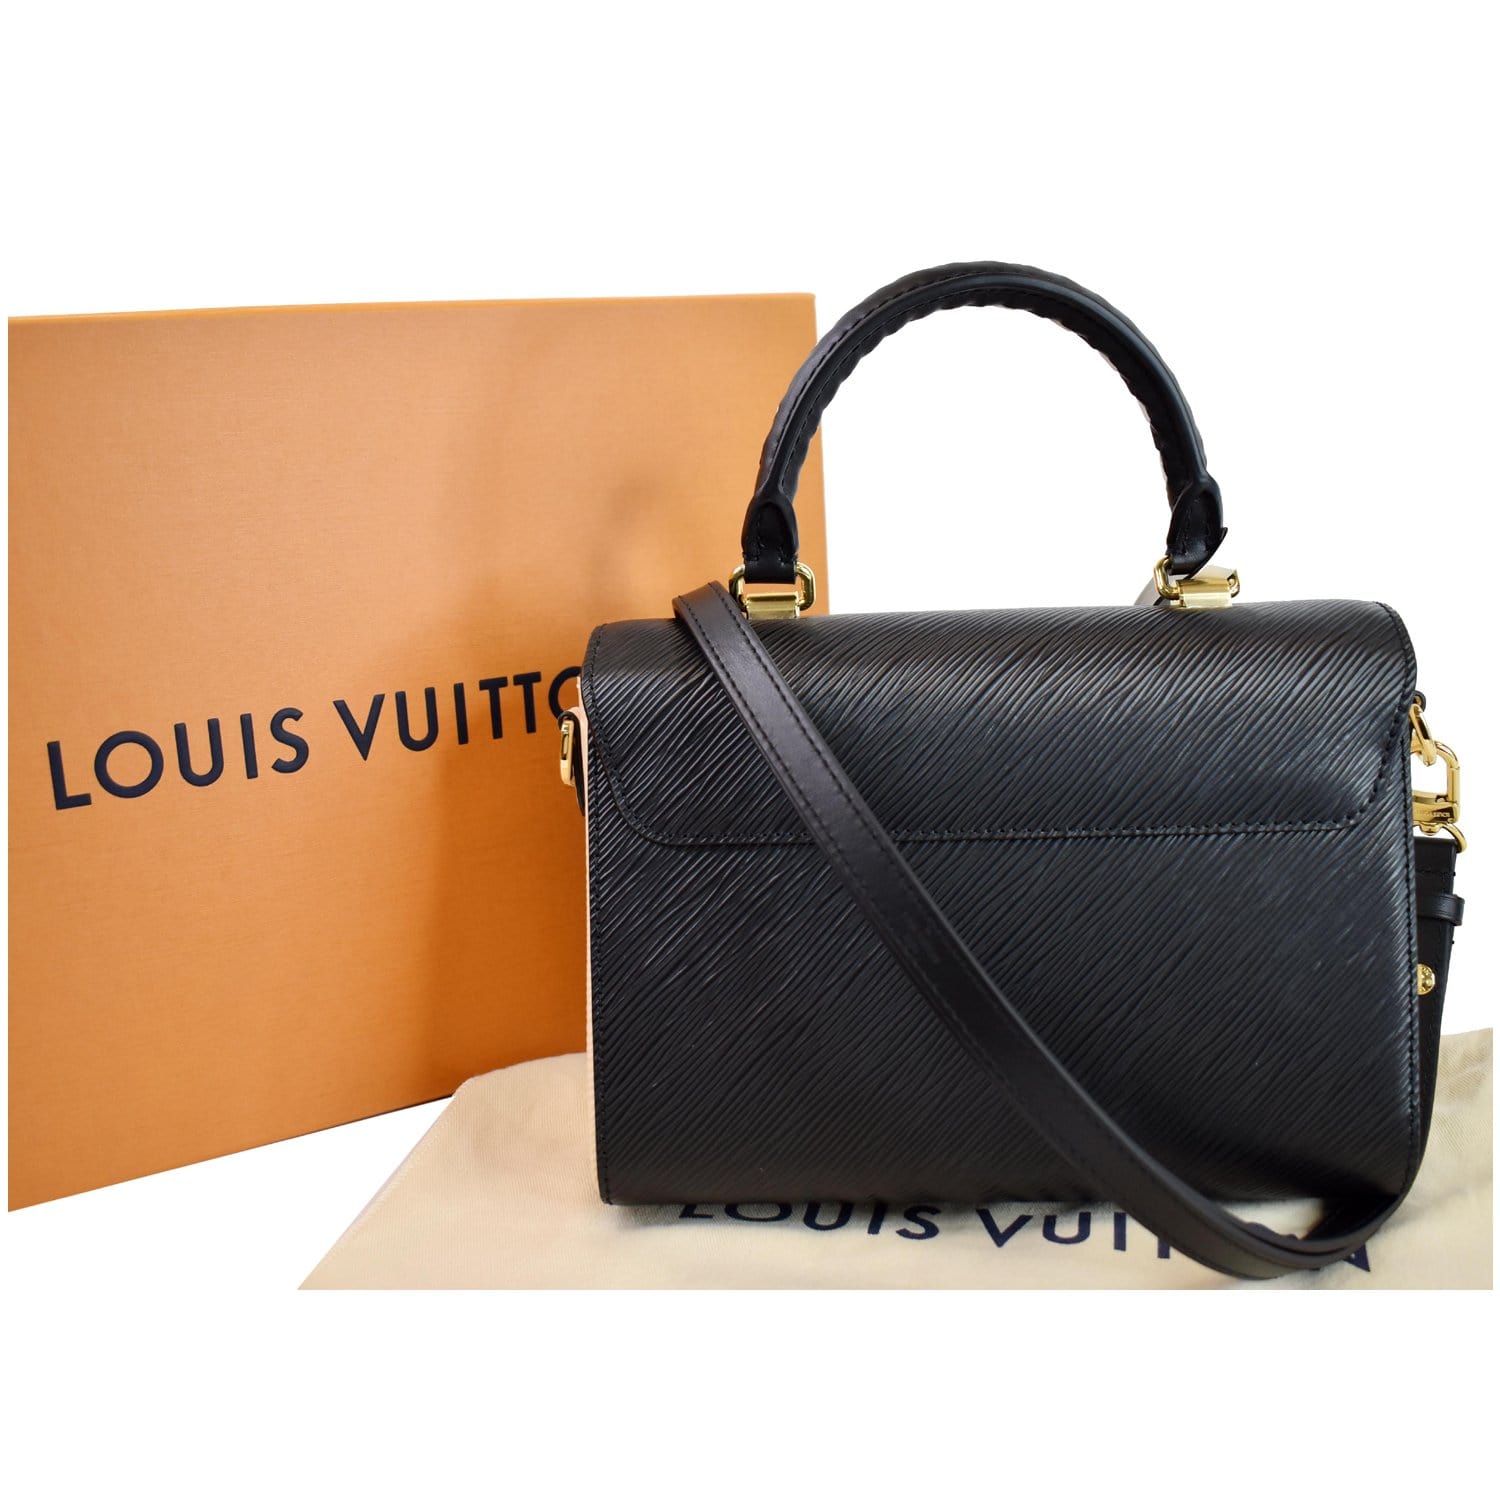 Shop Louis Vuitton TWIST Louis Vuitton TWIST ONE HANDLE BB by